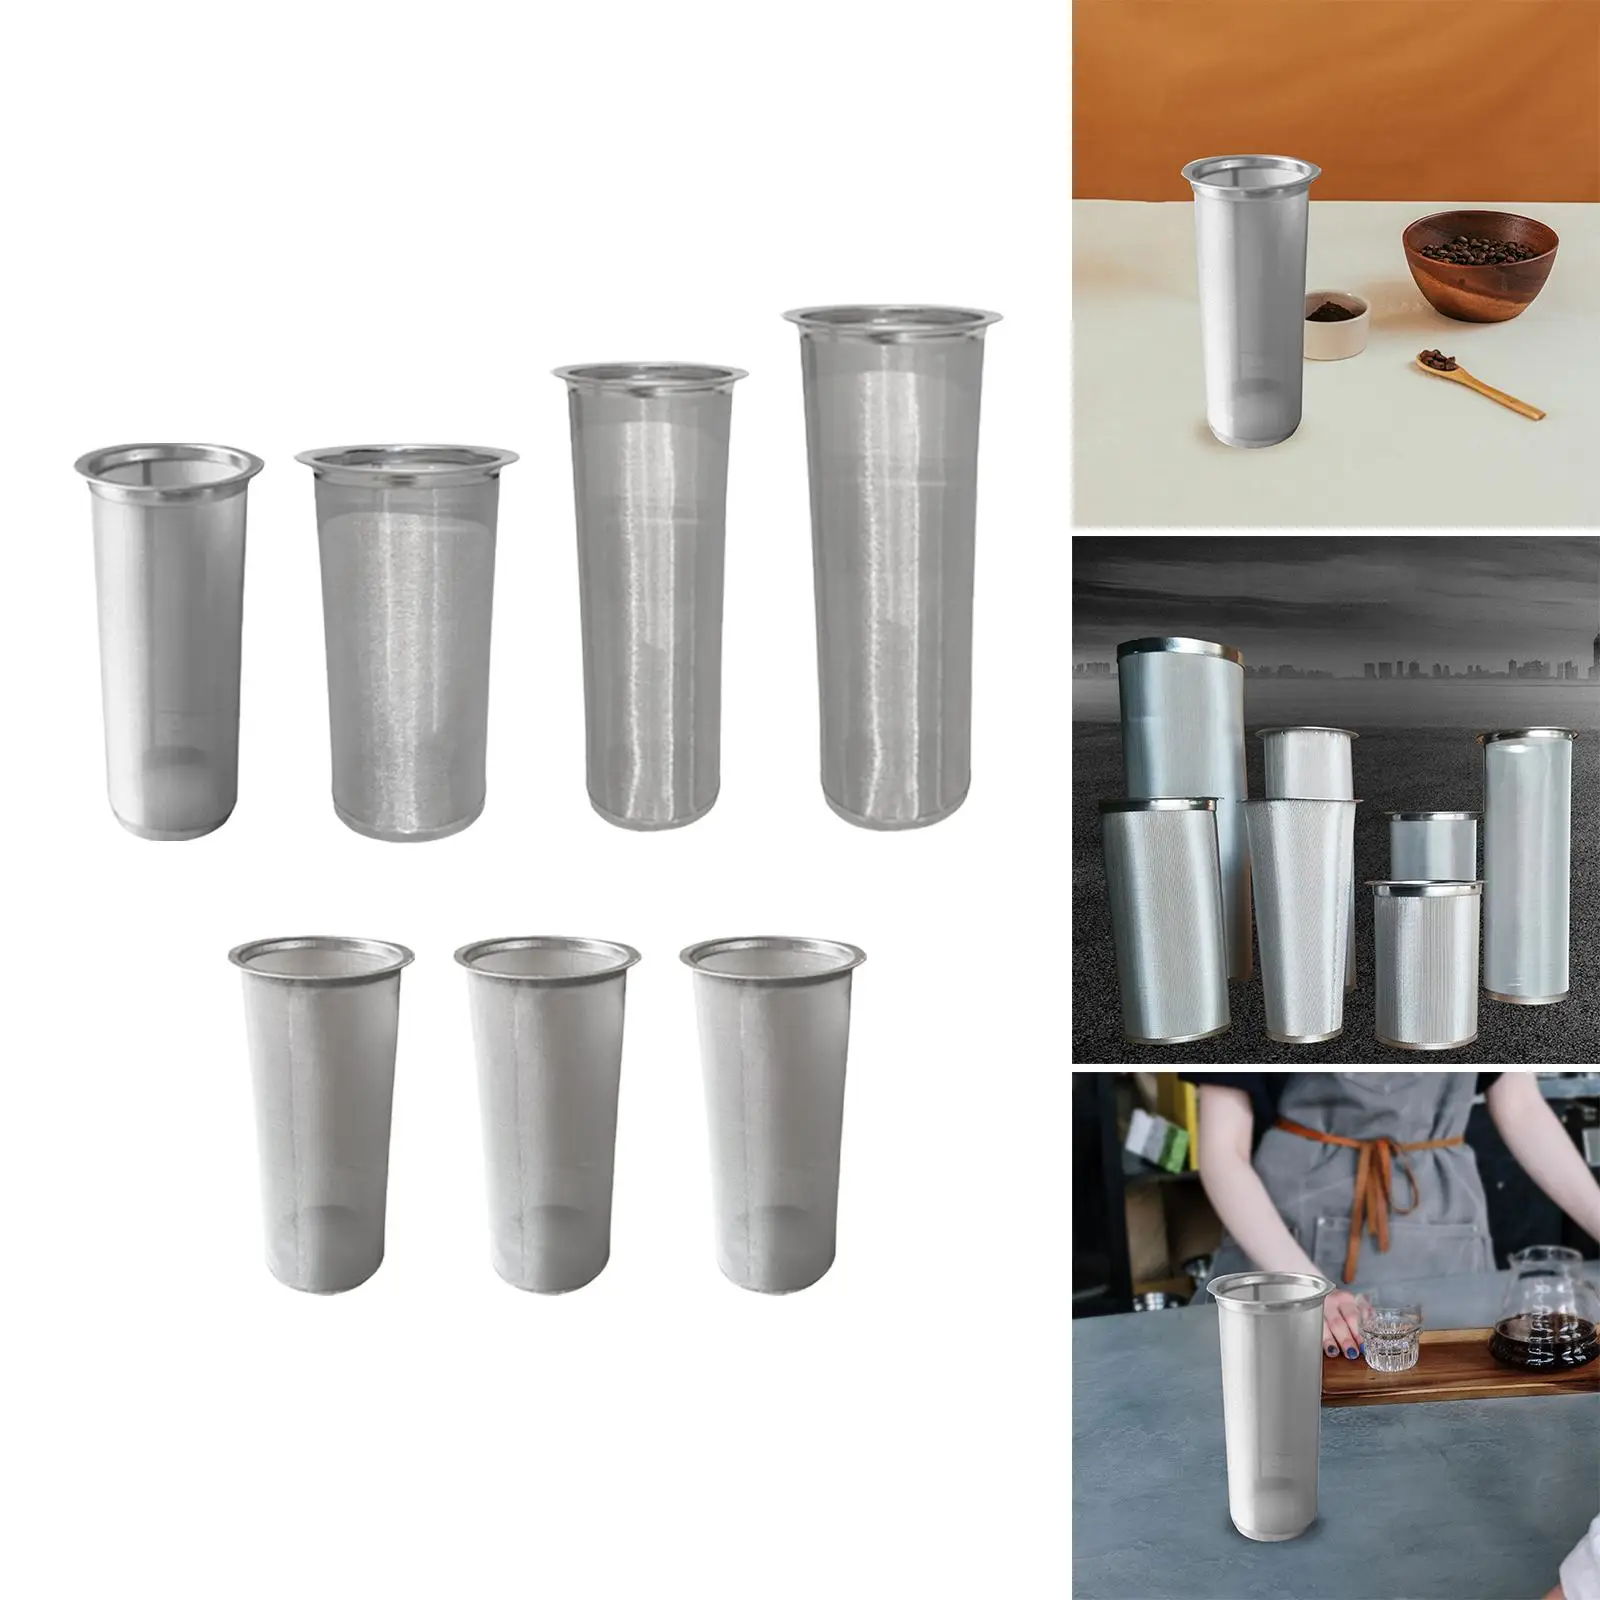 Stainless Steel Mesh Filter Tea Filter Infusers Basket Lightweight